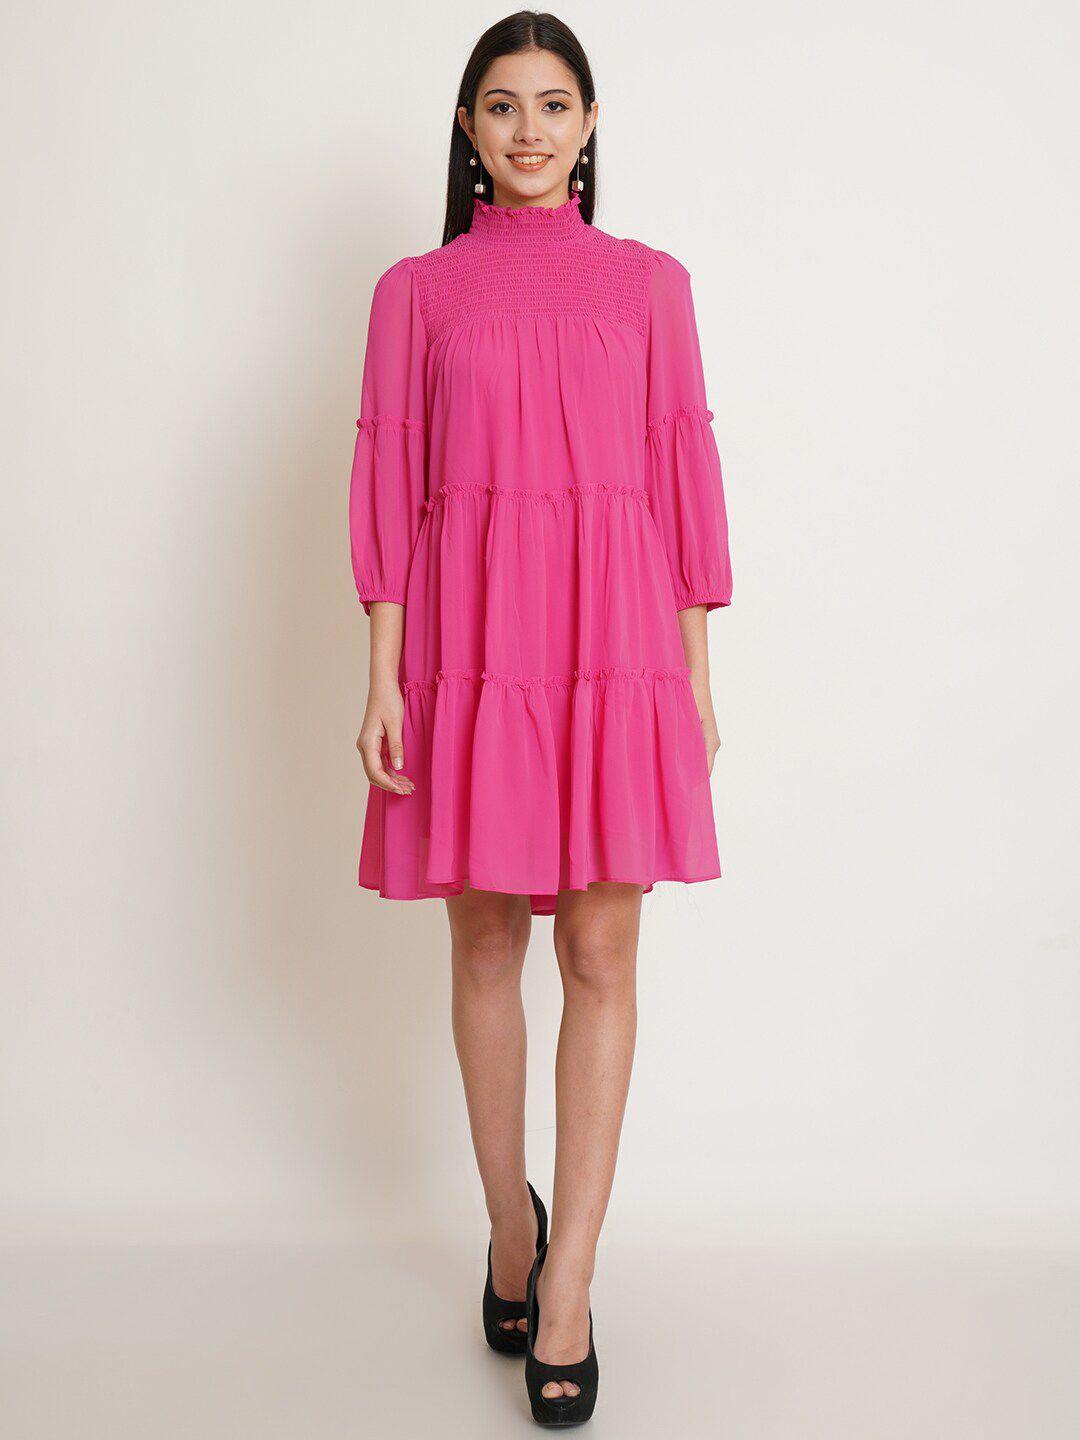 ix impression women pink a-line high neck smocked & tiered dress